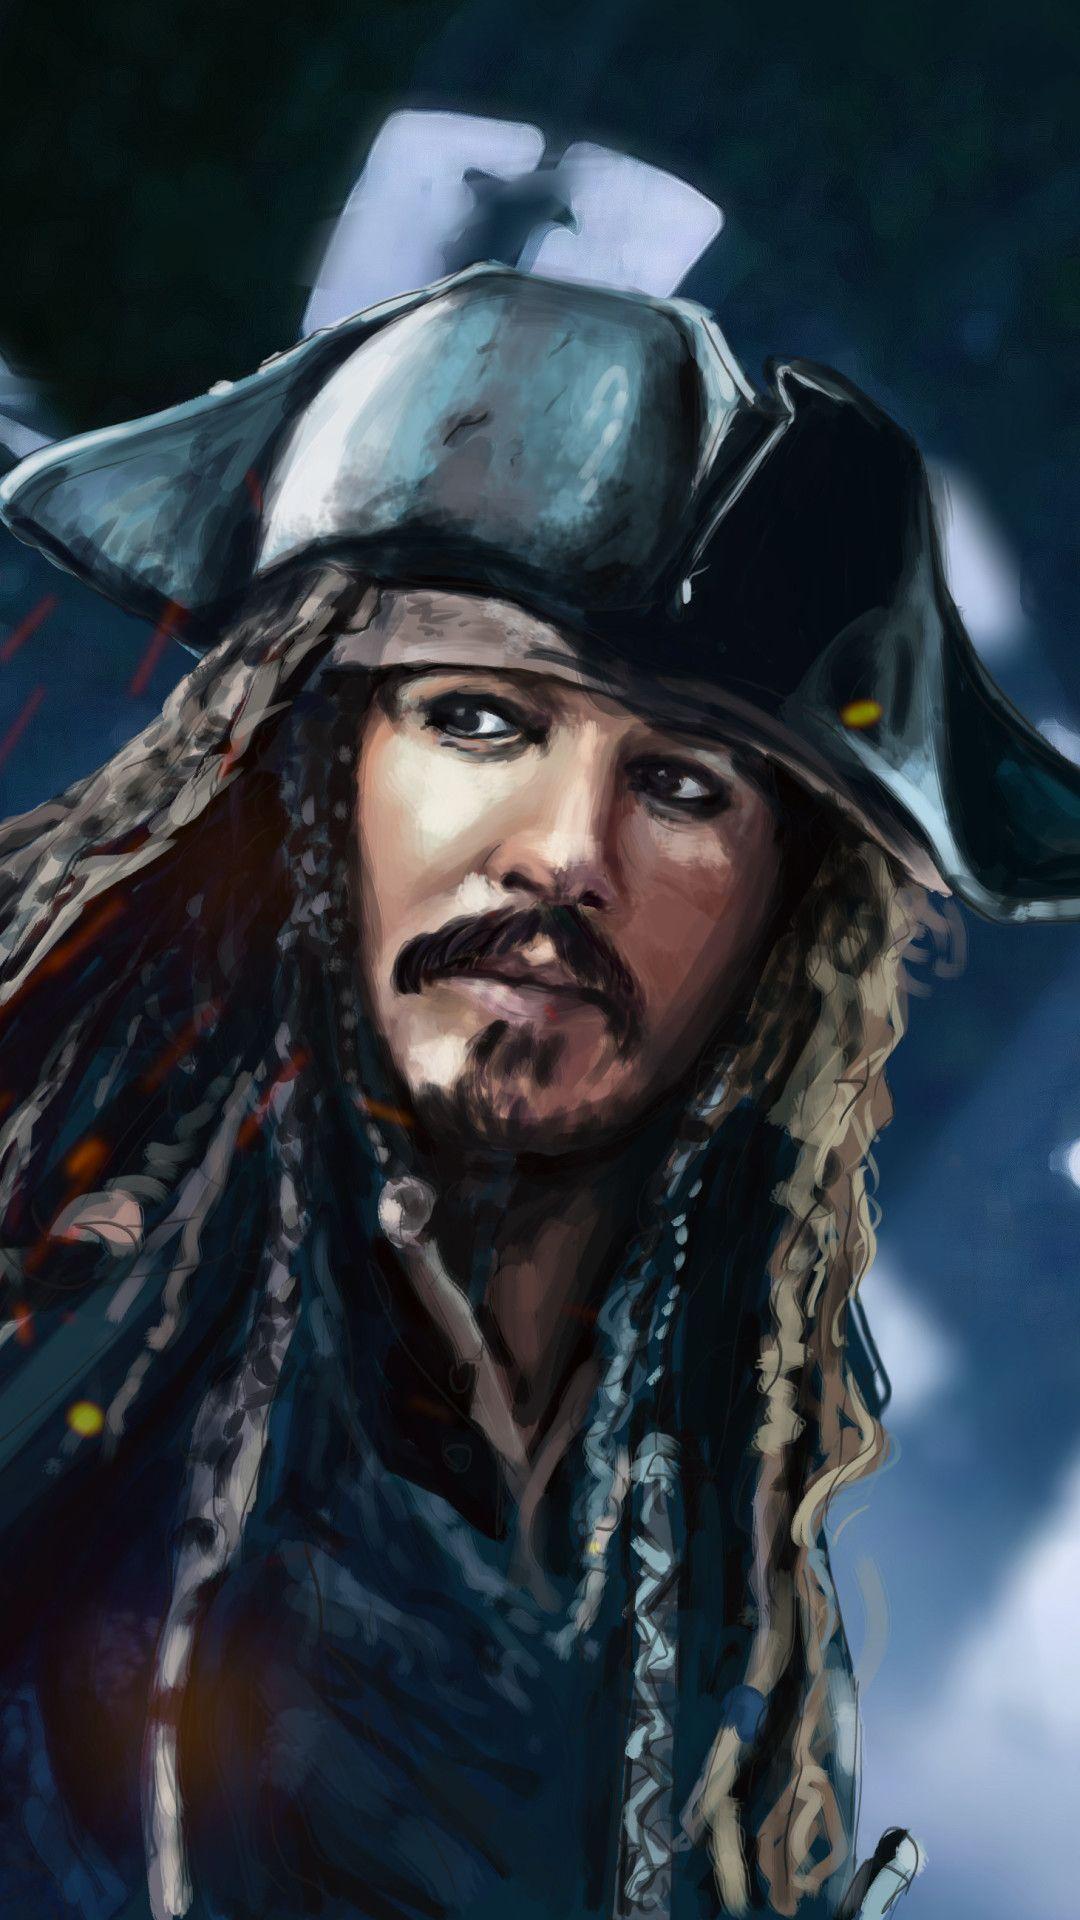 1080x1920 Jack Sparrow 5k Ảnh minh họa iPhone 7, 6s, 6 Plus, Pixel xl